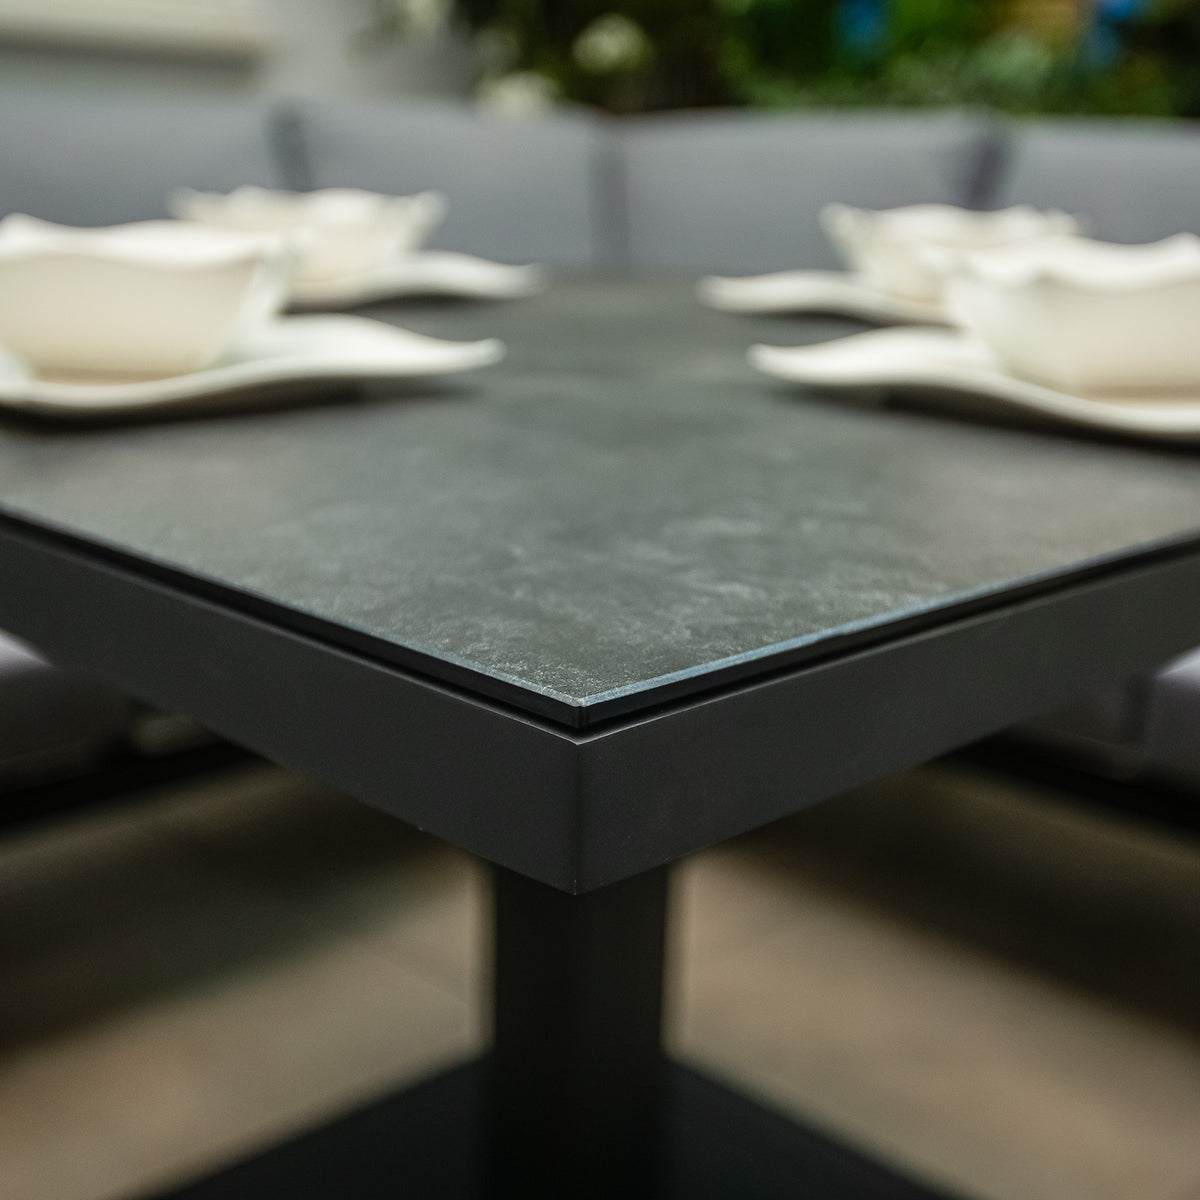 Bracken Outdoors Miami Dark Aluminium Compact Corner Set with Adjustable Table